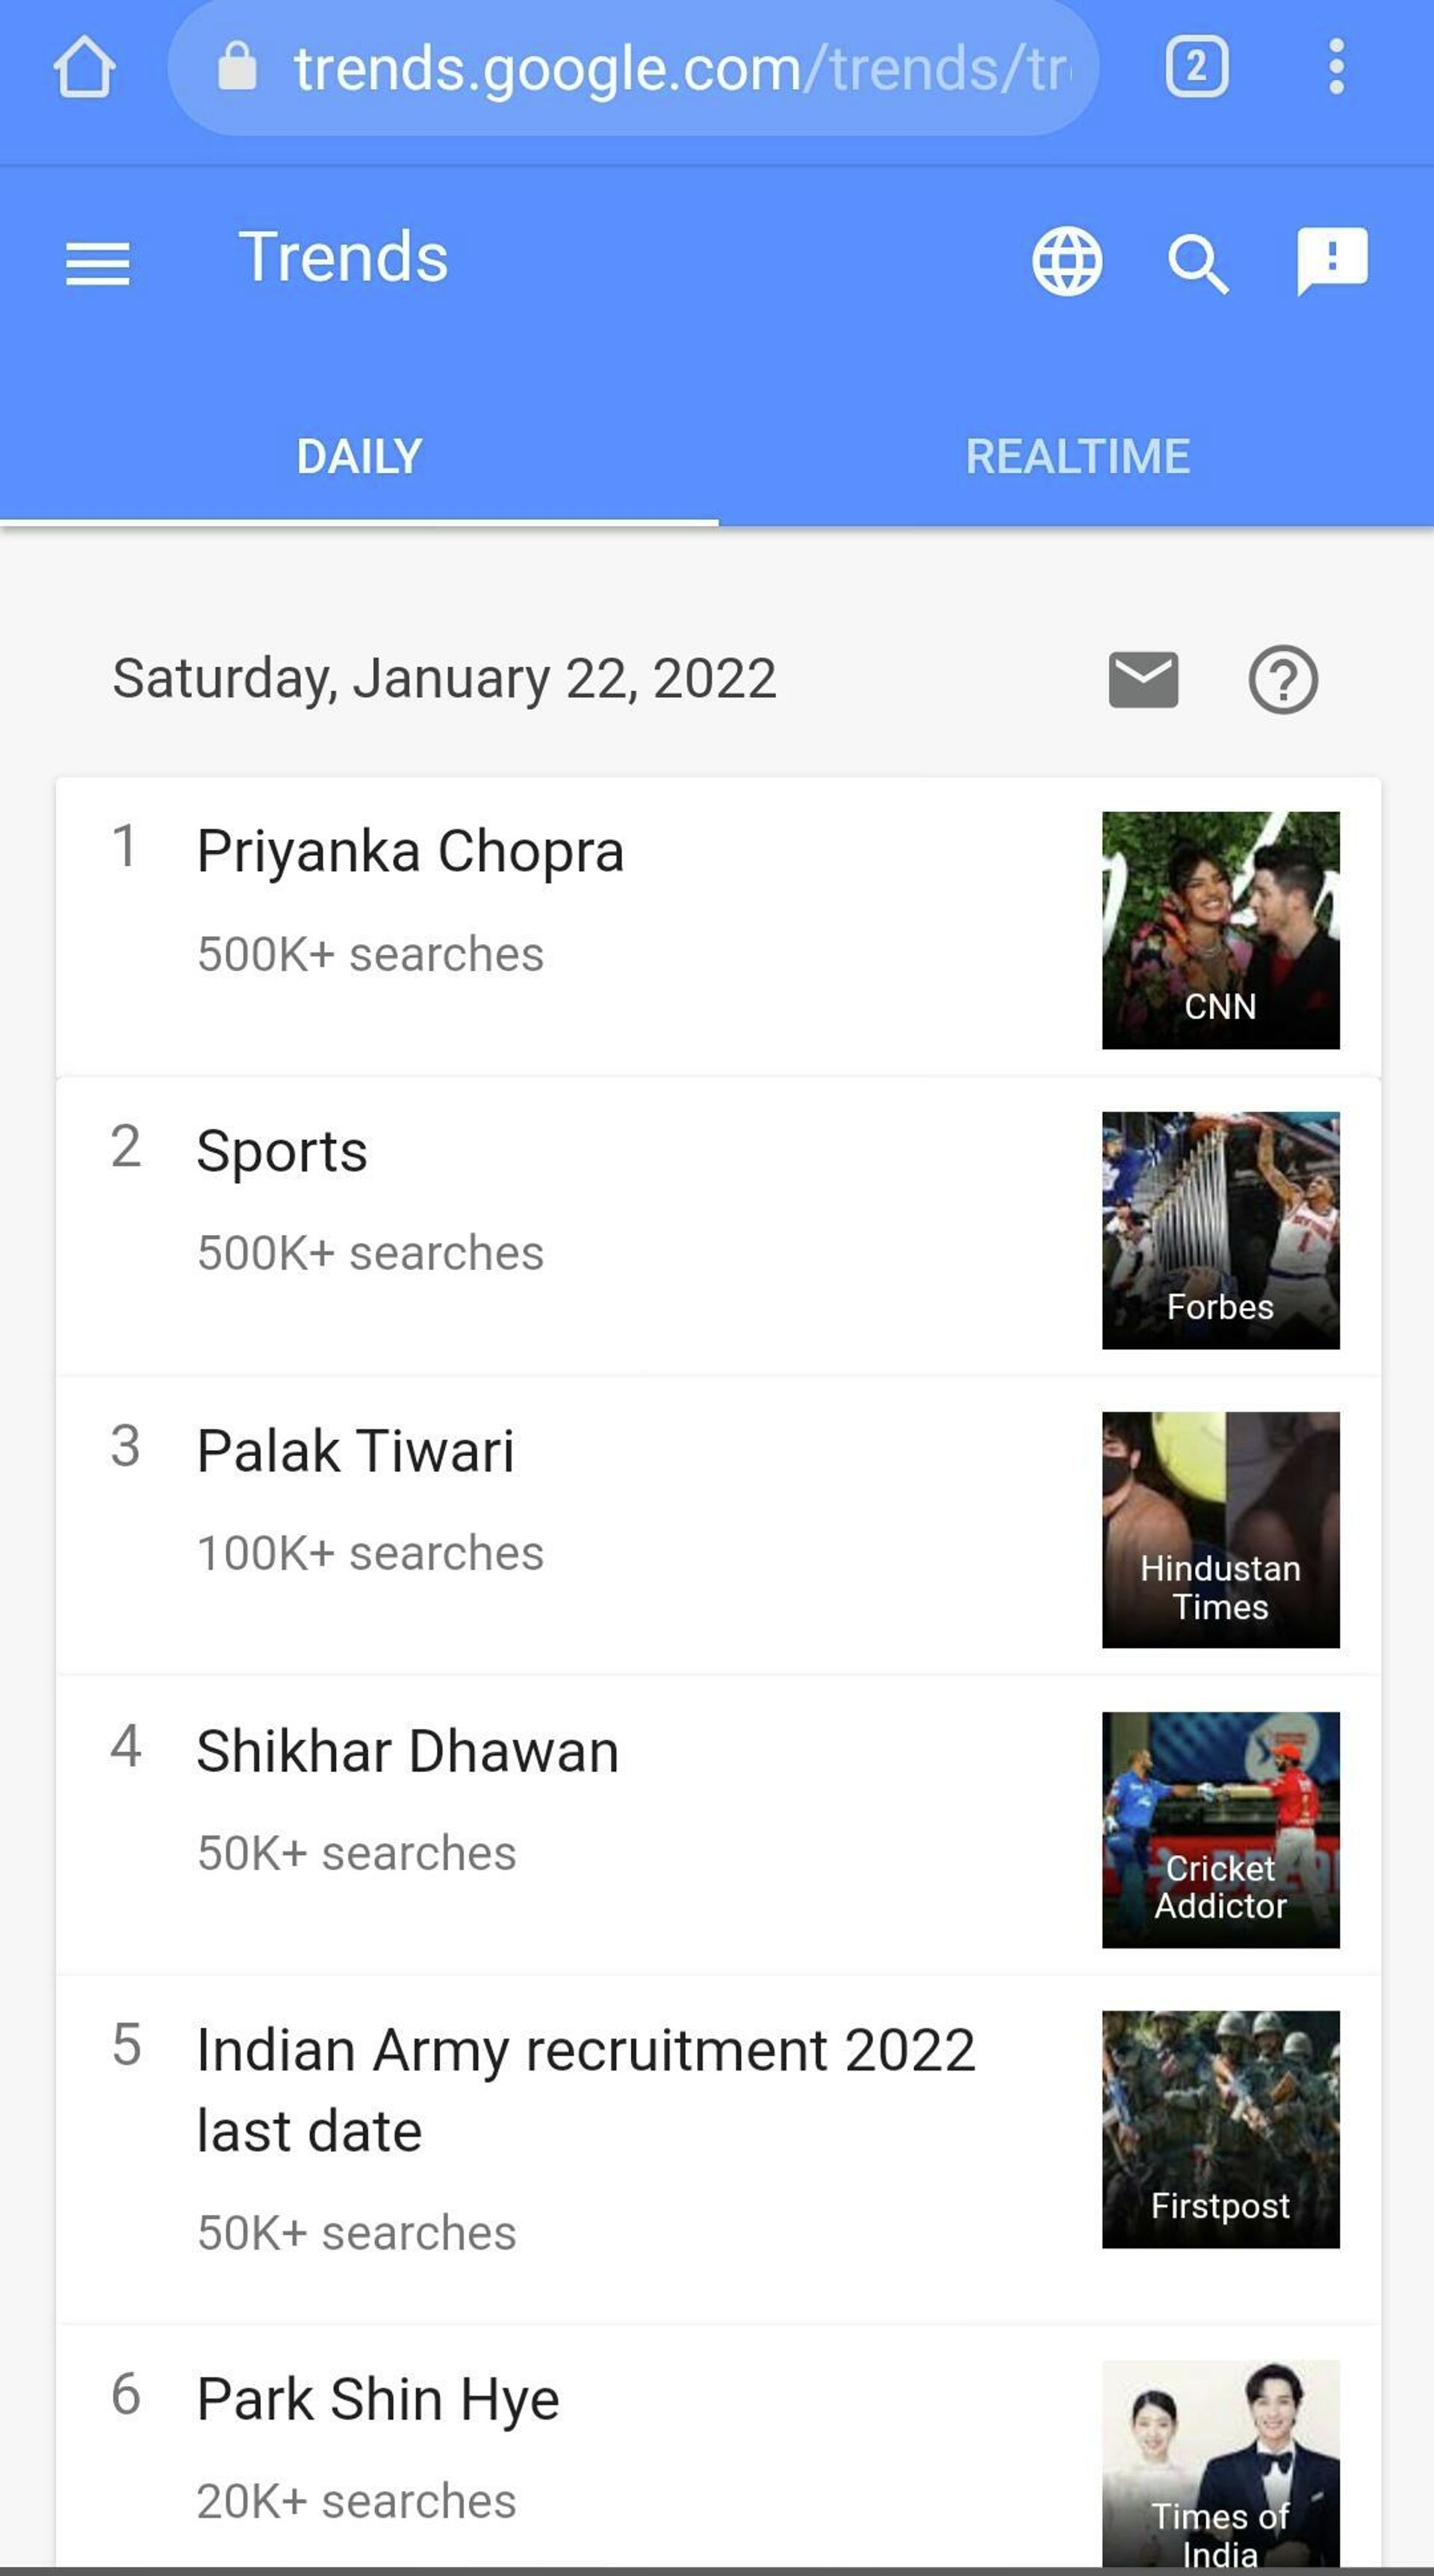 Priyanka Chopra search request tops Google Trends - Sputnik International, 1920, 22.01.2022